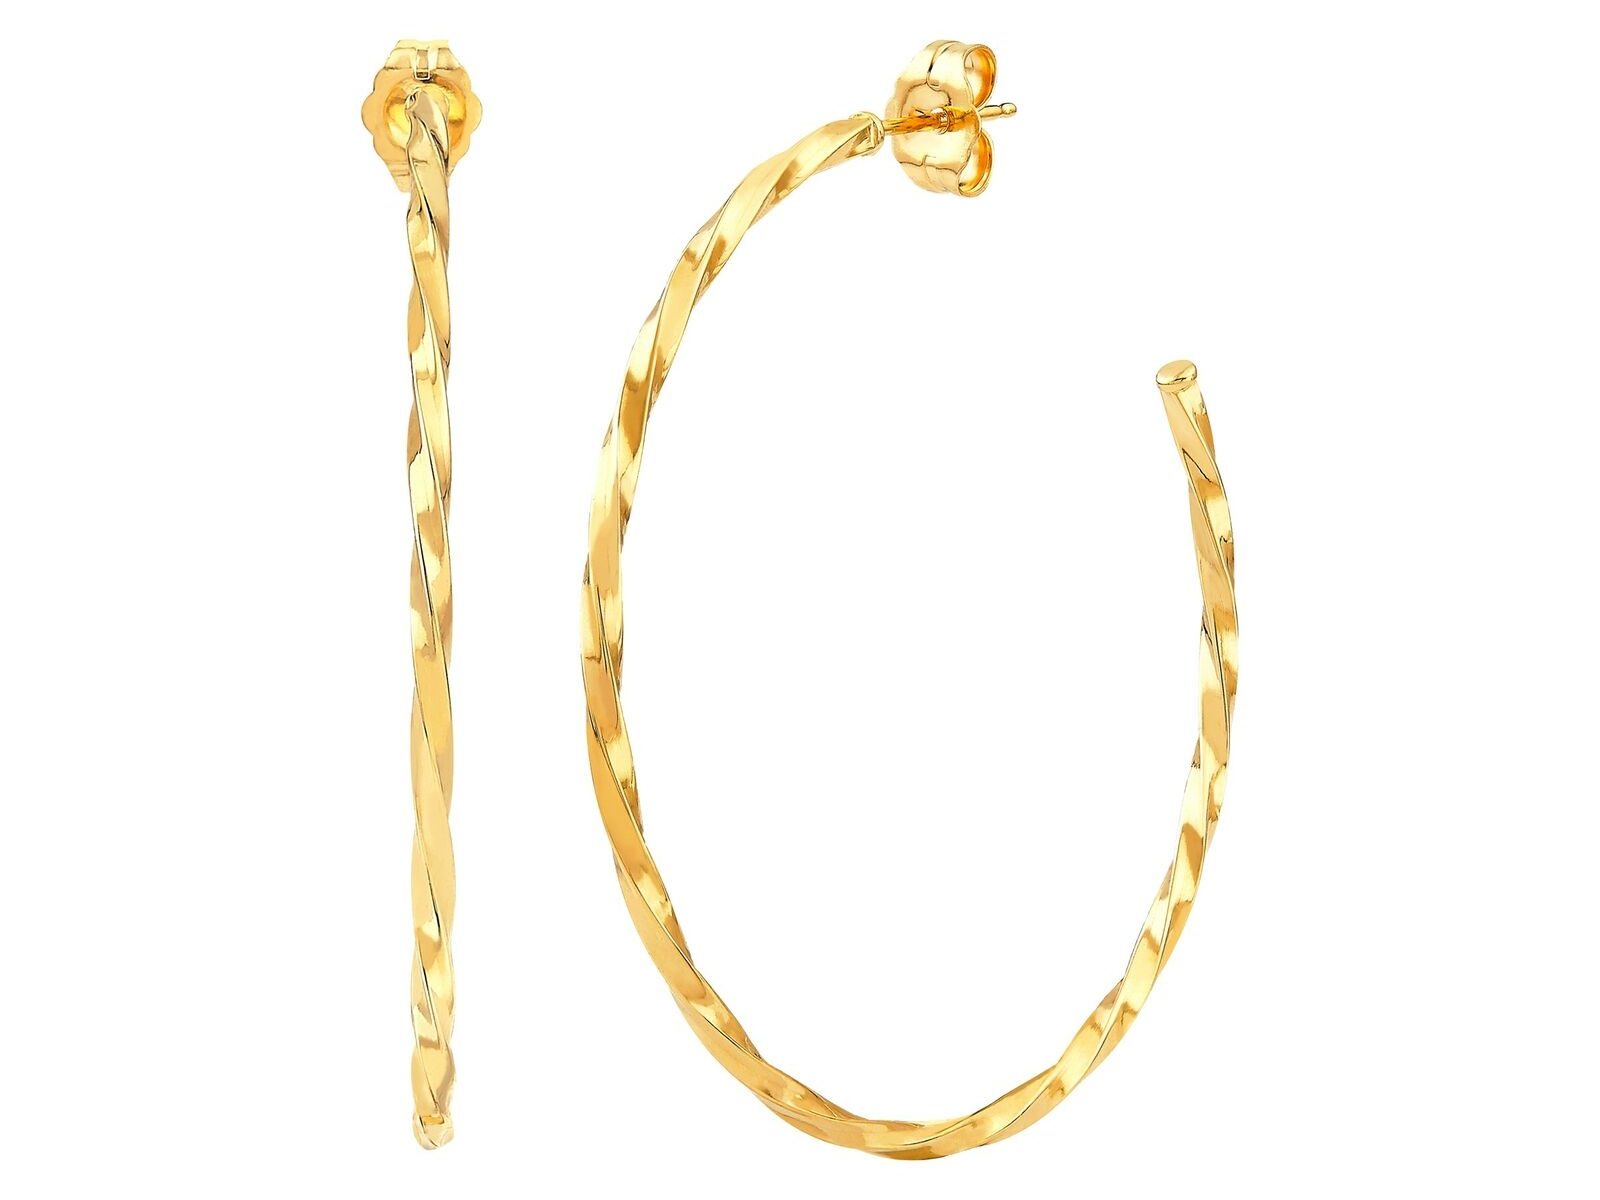 40 Mm Round & Twisted C-Hoop Earrings in 14K Gold